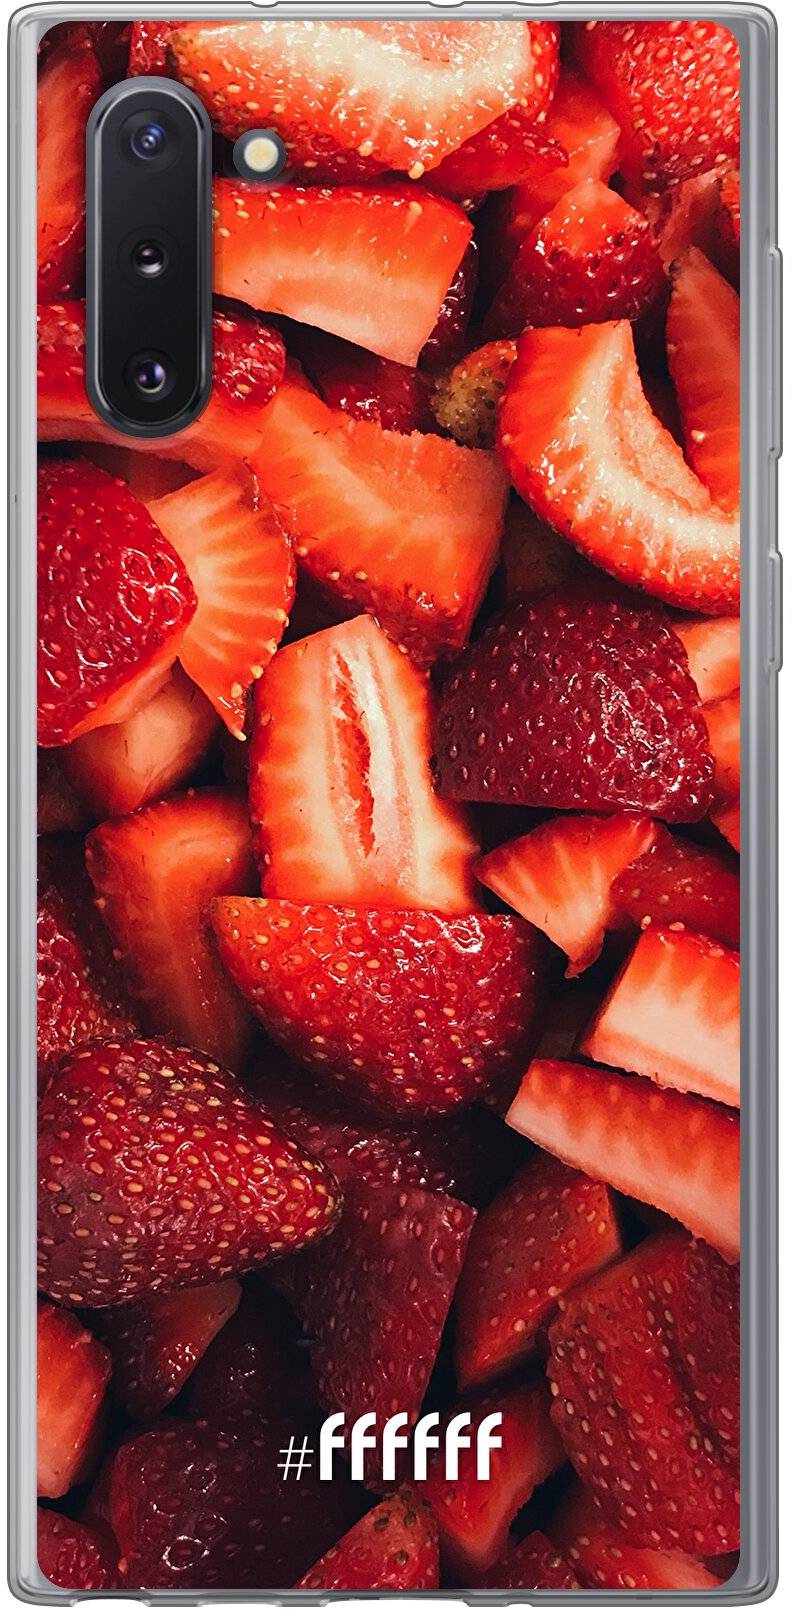 Strawberry Fields Galaxy Note 10